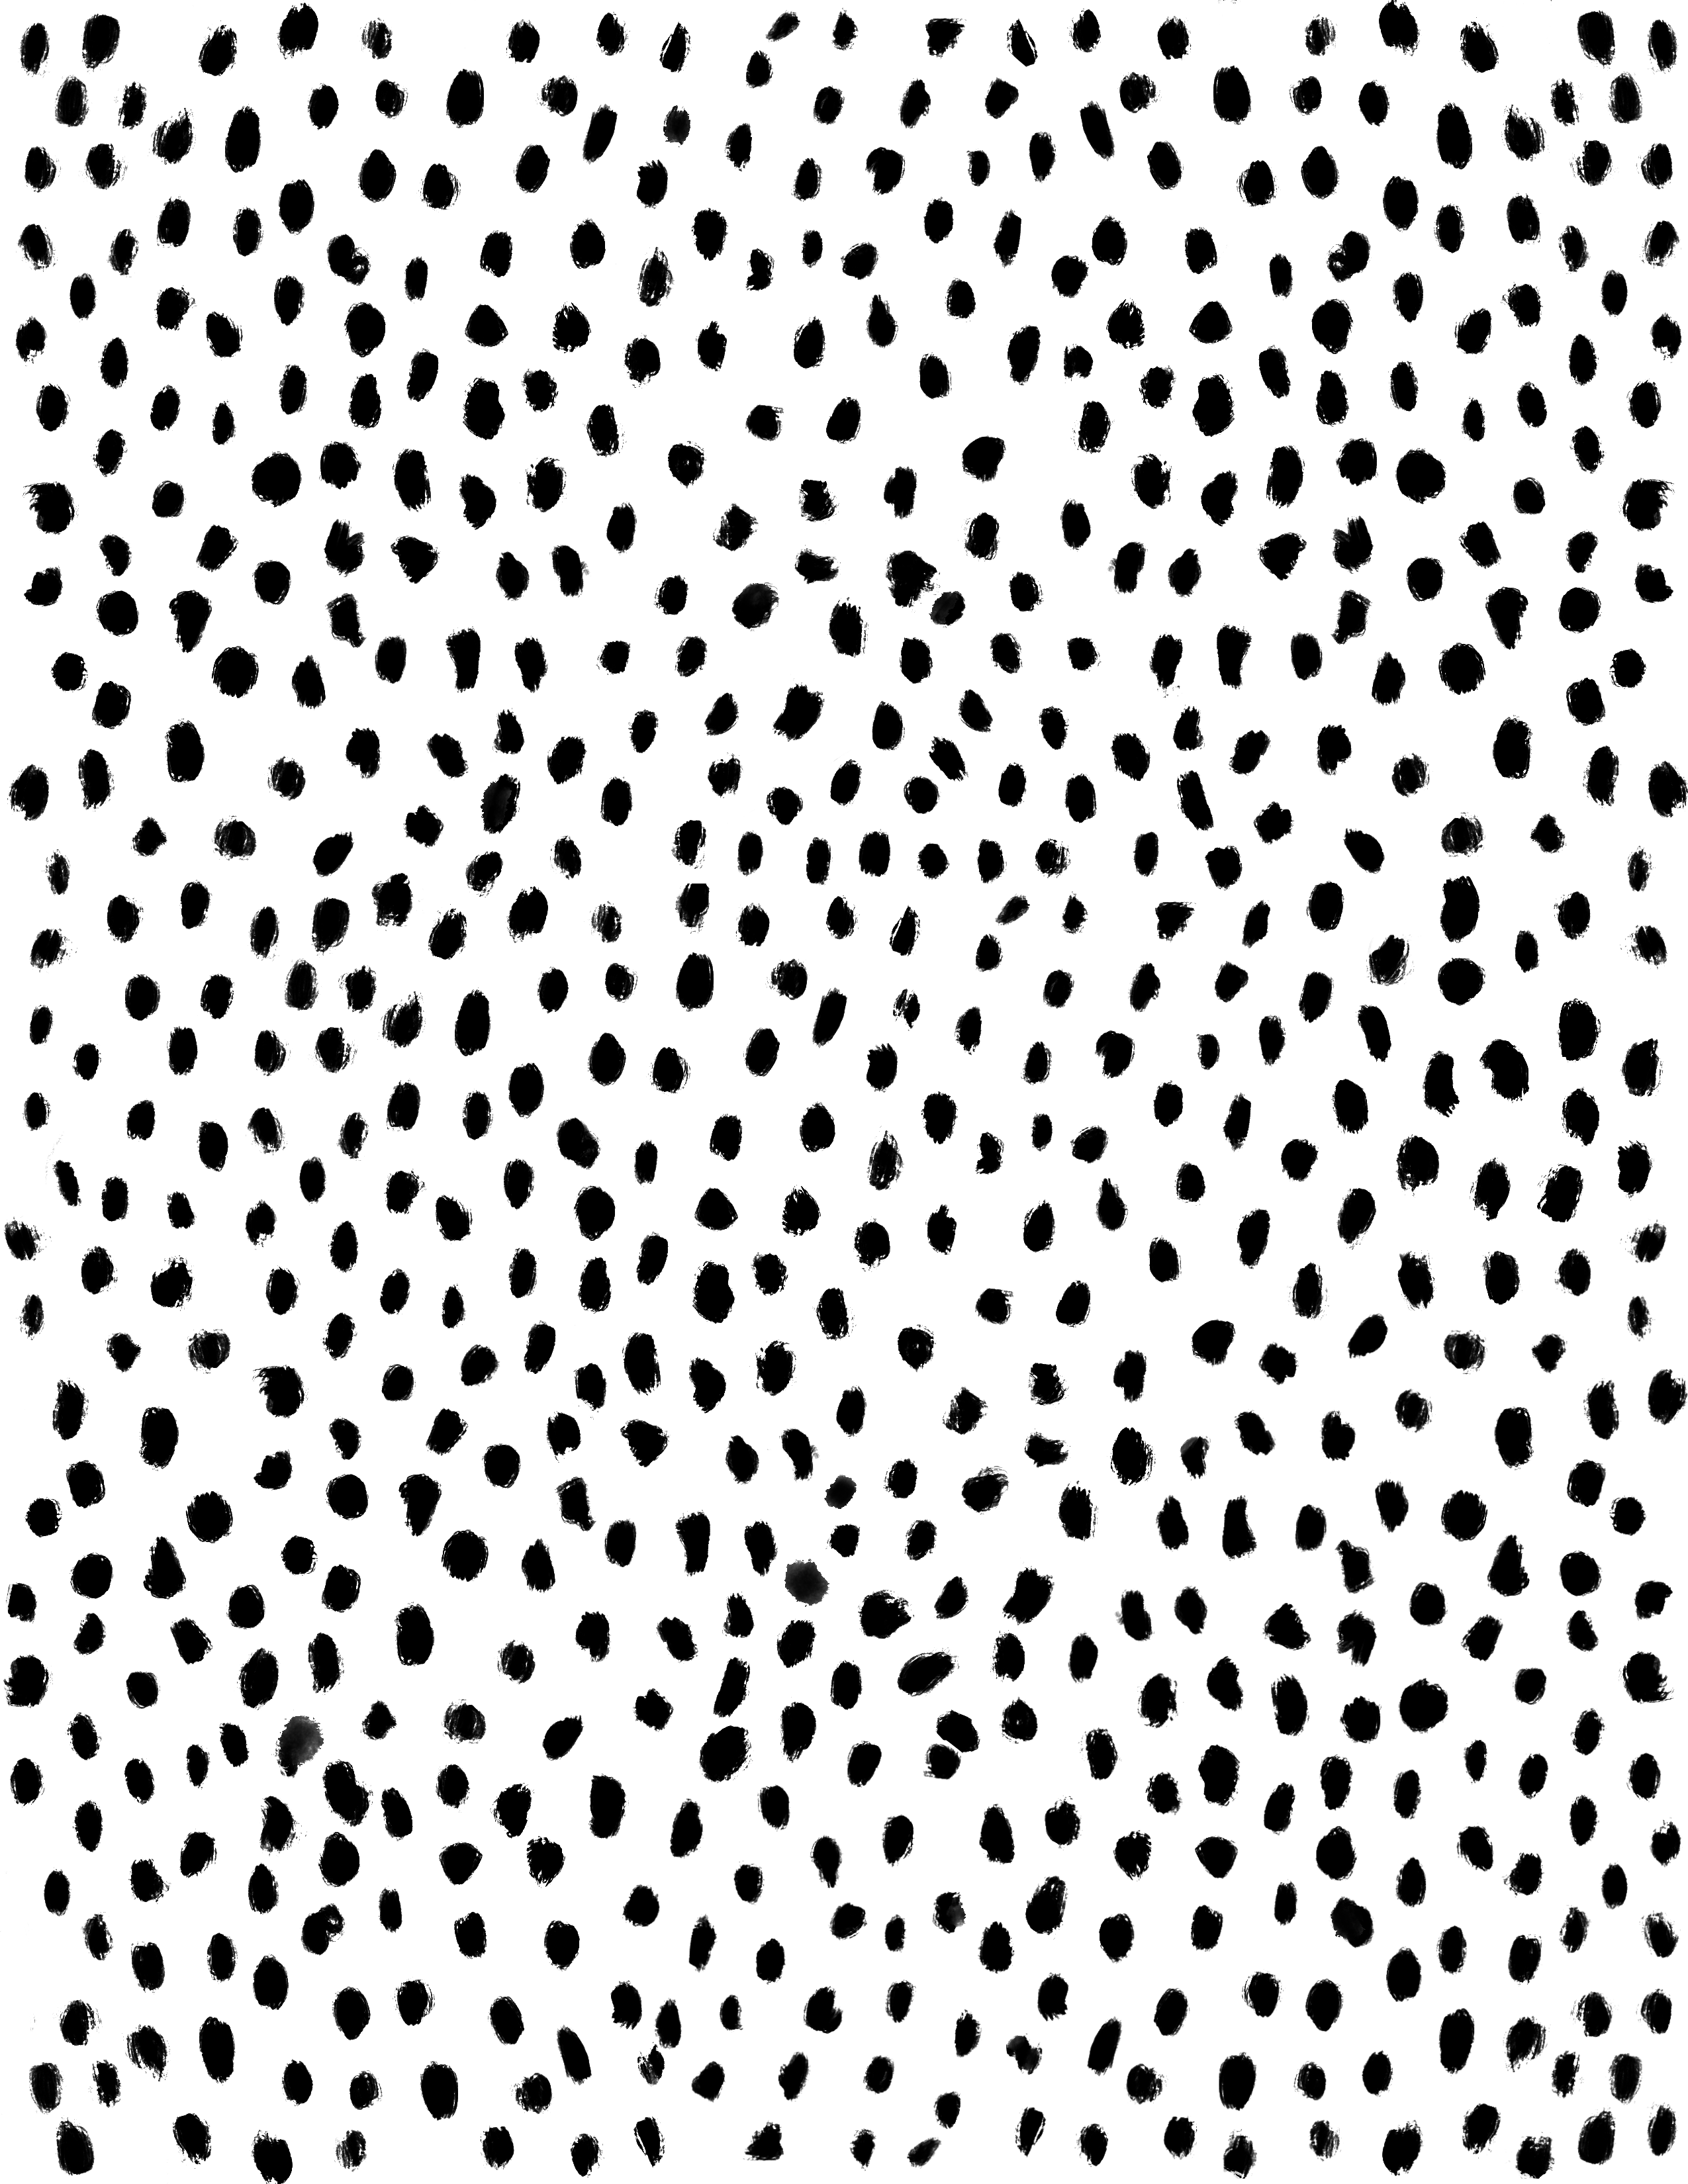 Dalmatian print. Polka dots wallpaper, iPhone wallpaper pattern, Preppy wallpaper